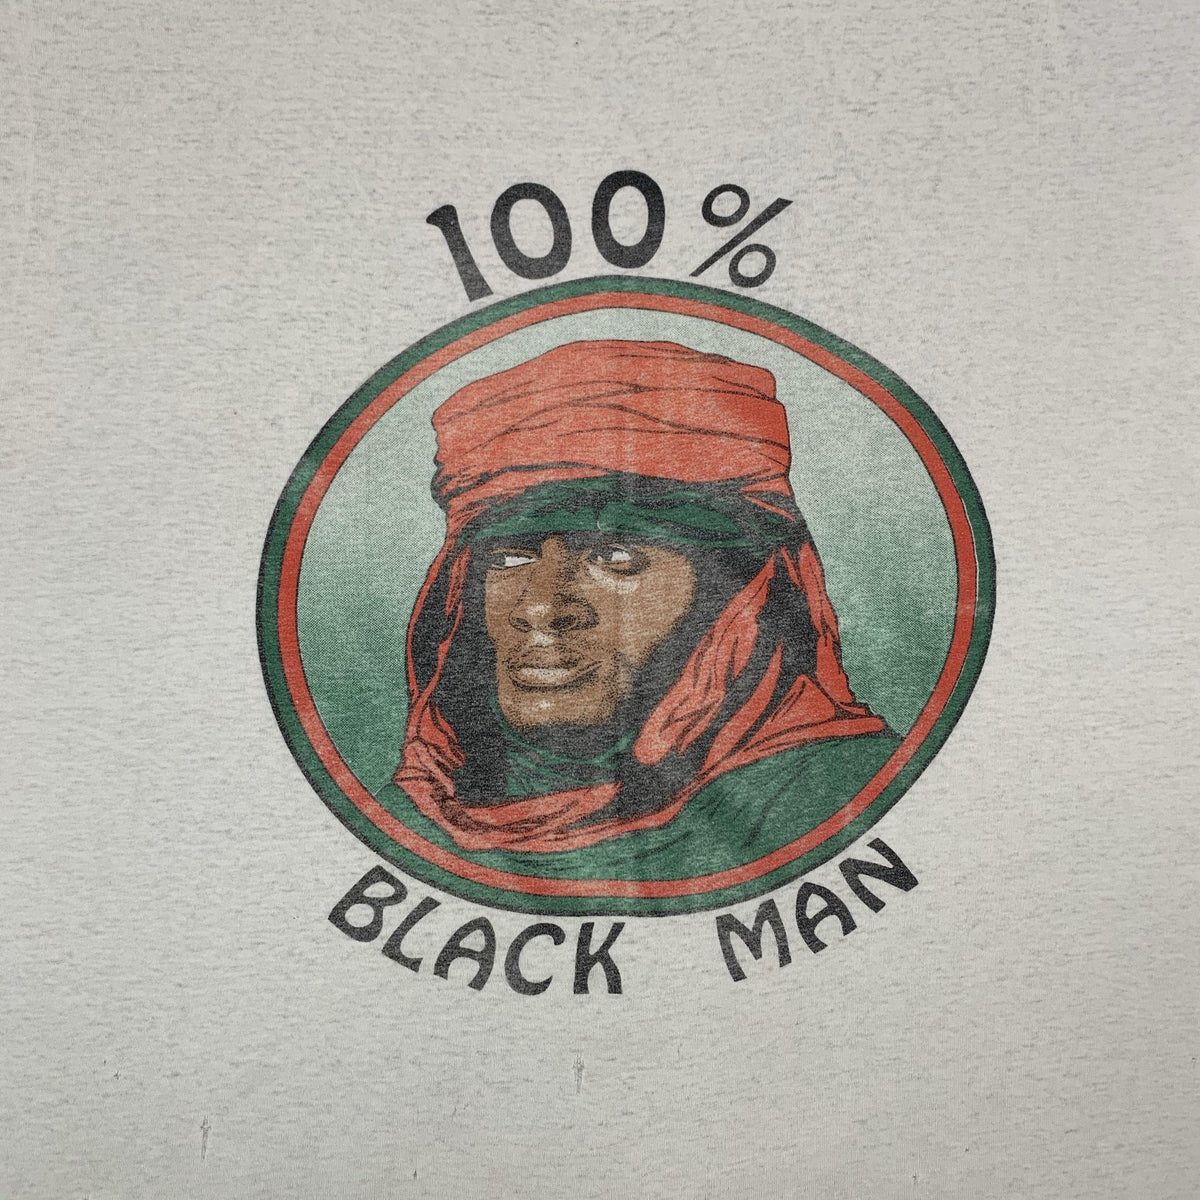 Vintage 100% Black Man “Just Do It!” T-Shirt - jointcustodydc